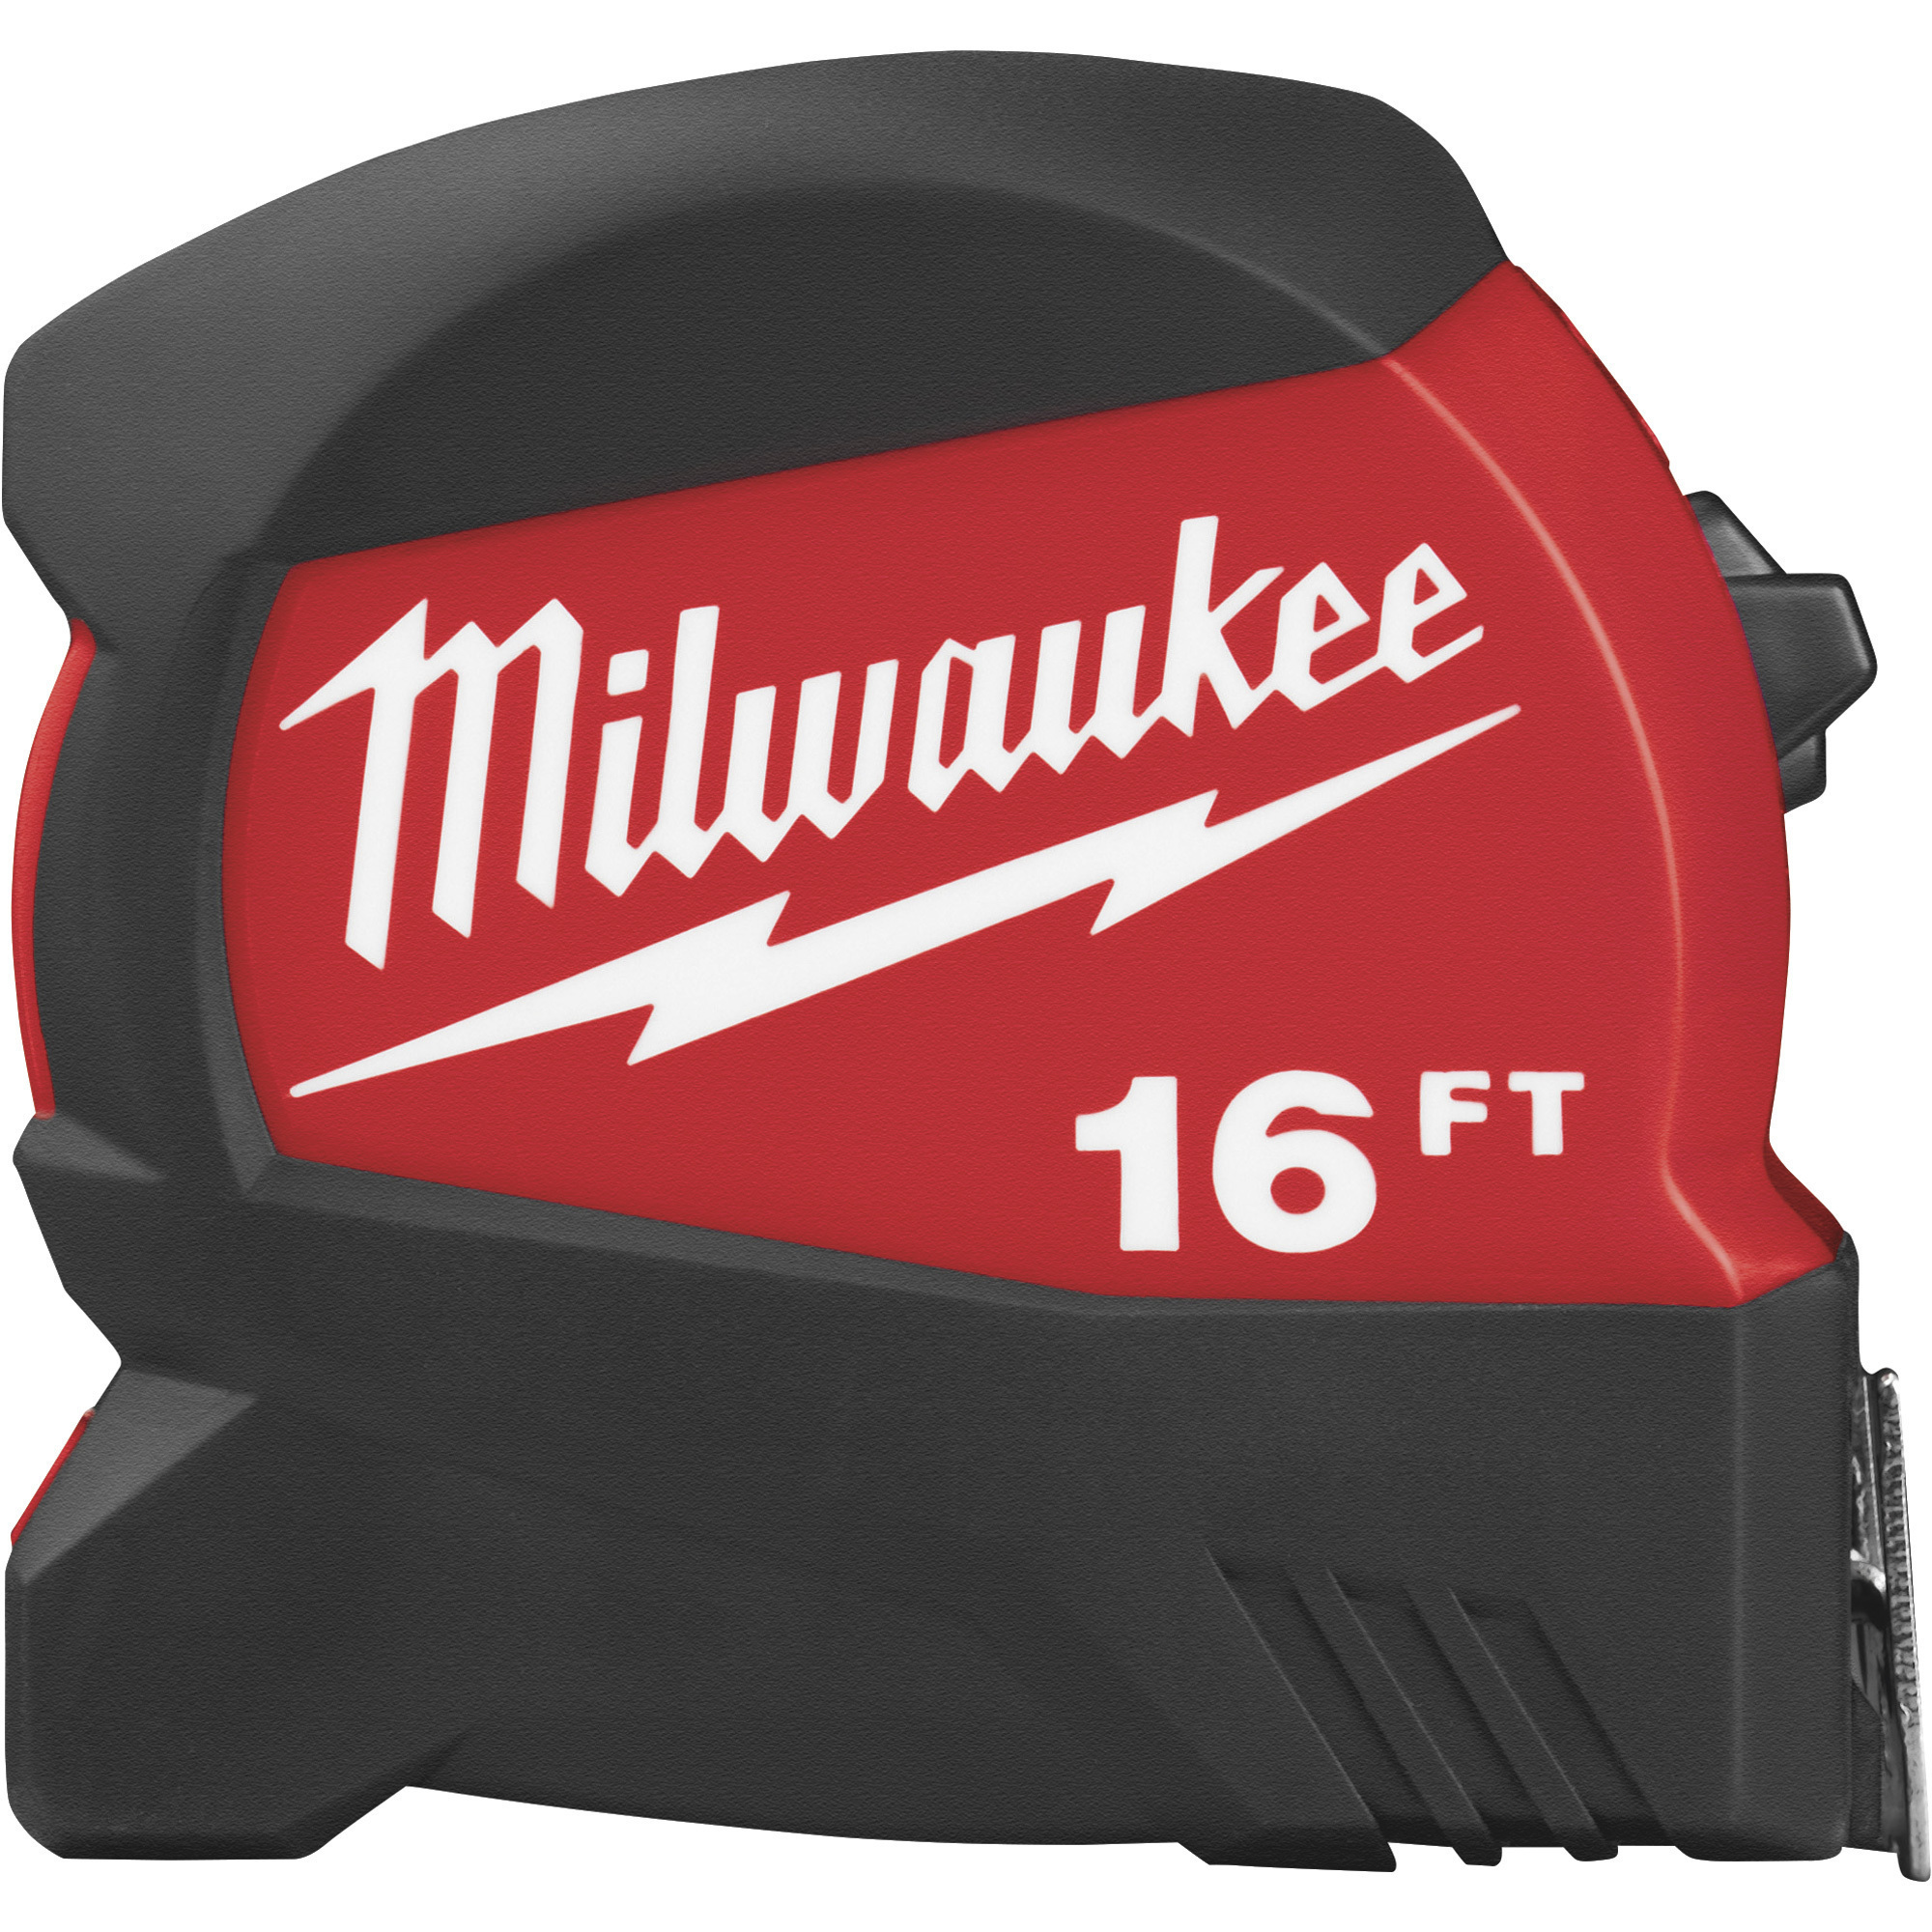 Milwaukee 16ft. Compact Wide Blade Tape Measure, Model 48-22-0416